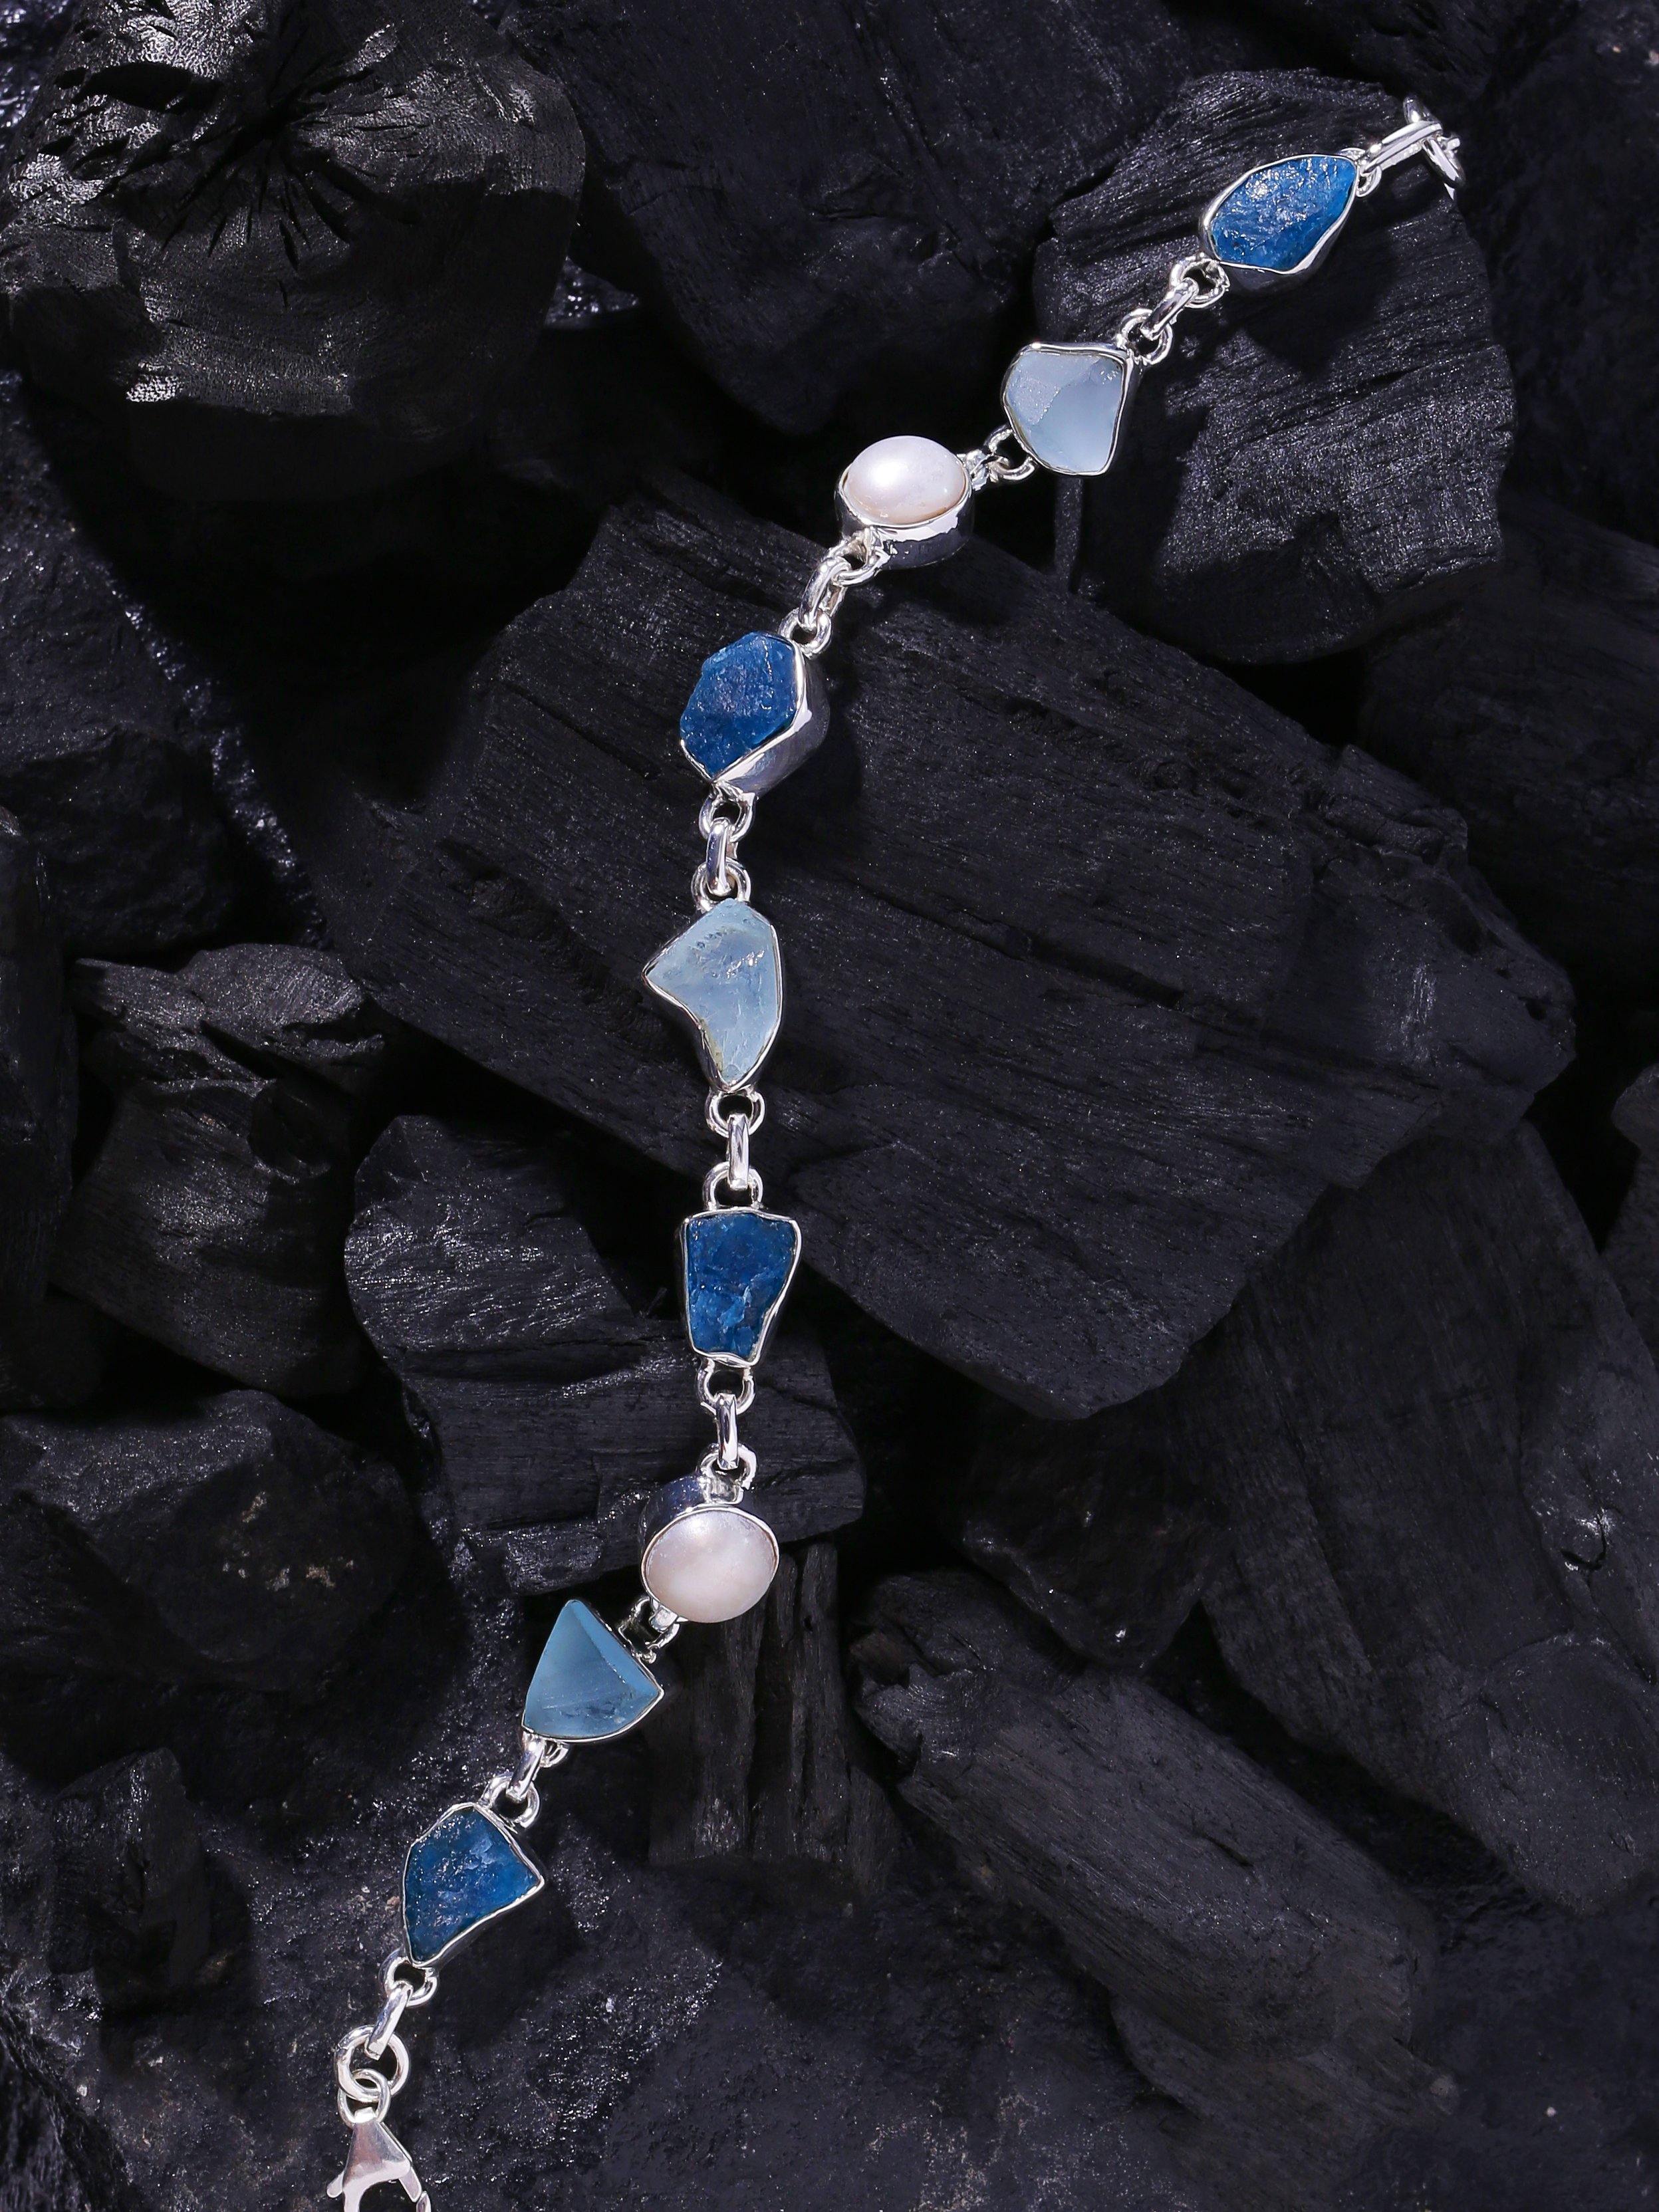 Blue Topaz Apatite Pearl Solid 925 Sterling Silver Link Bracelet Jewelry 8.5 Inch - YoTreasure